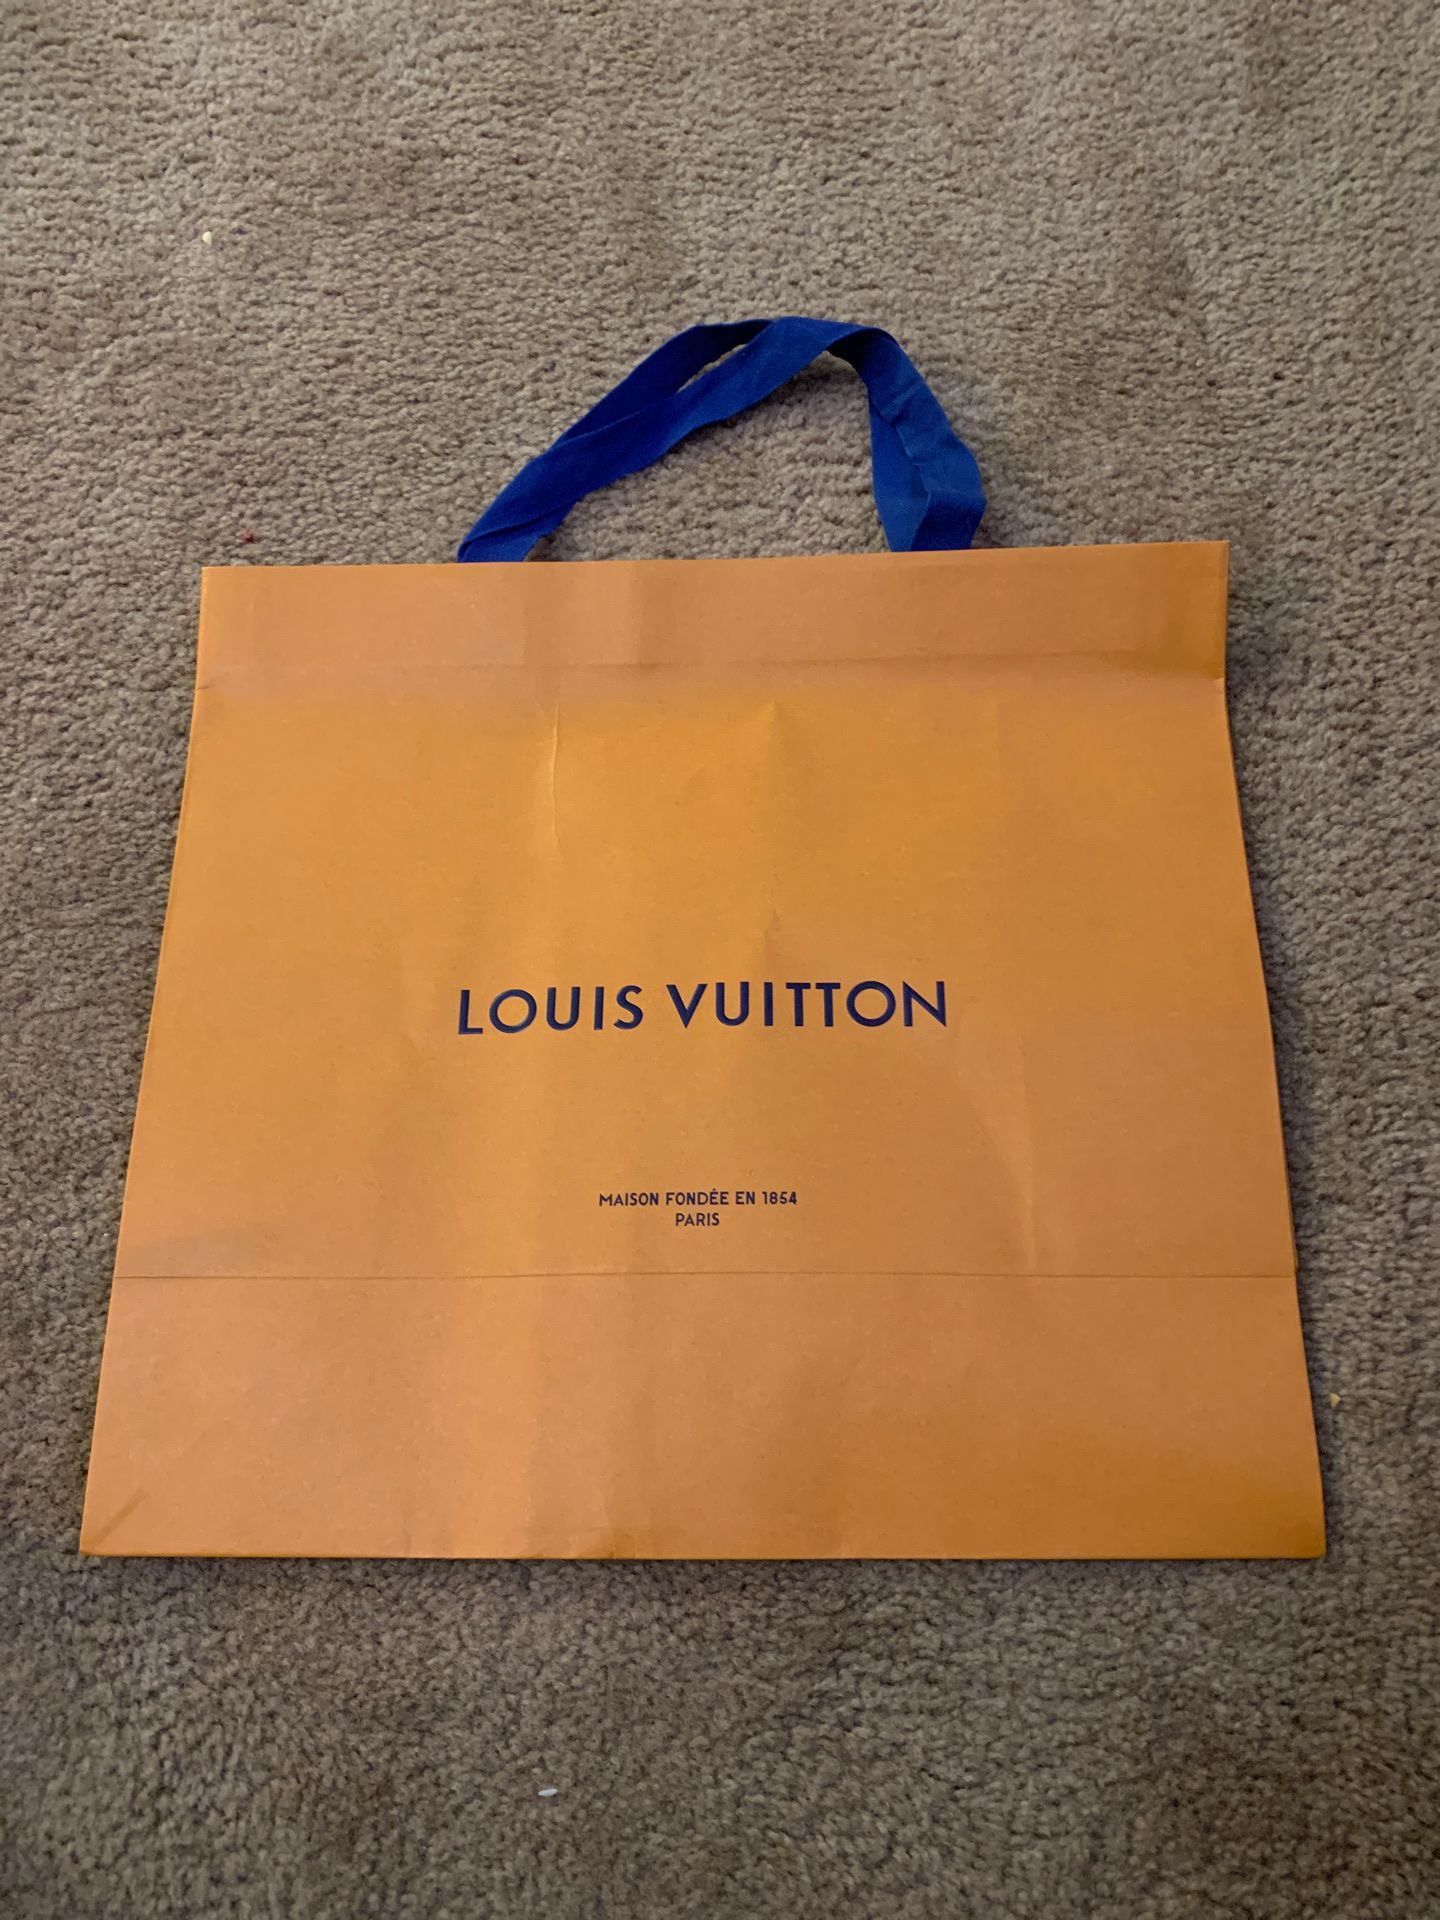 Louis Vuitton gift bag